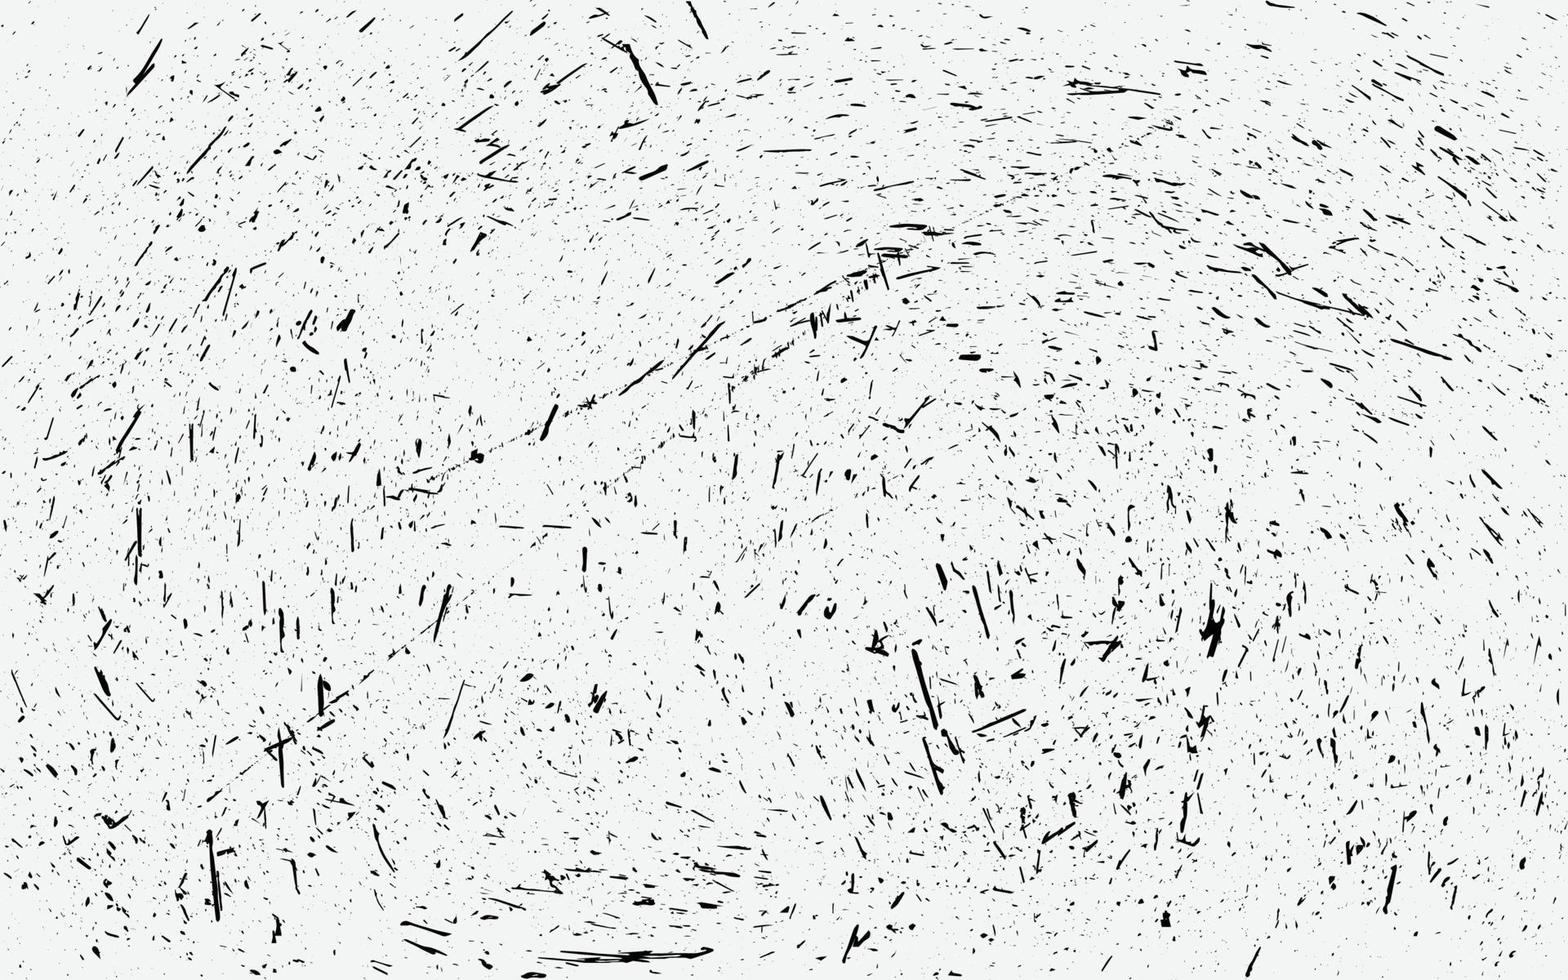 grunge rayado fondo urbano textura vector polvo superposición angustia granulado efecto grungy telón de fondo angustiado ilustración vectorial aislado negro sobre fondo blanco